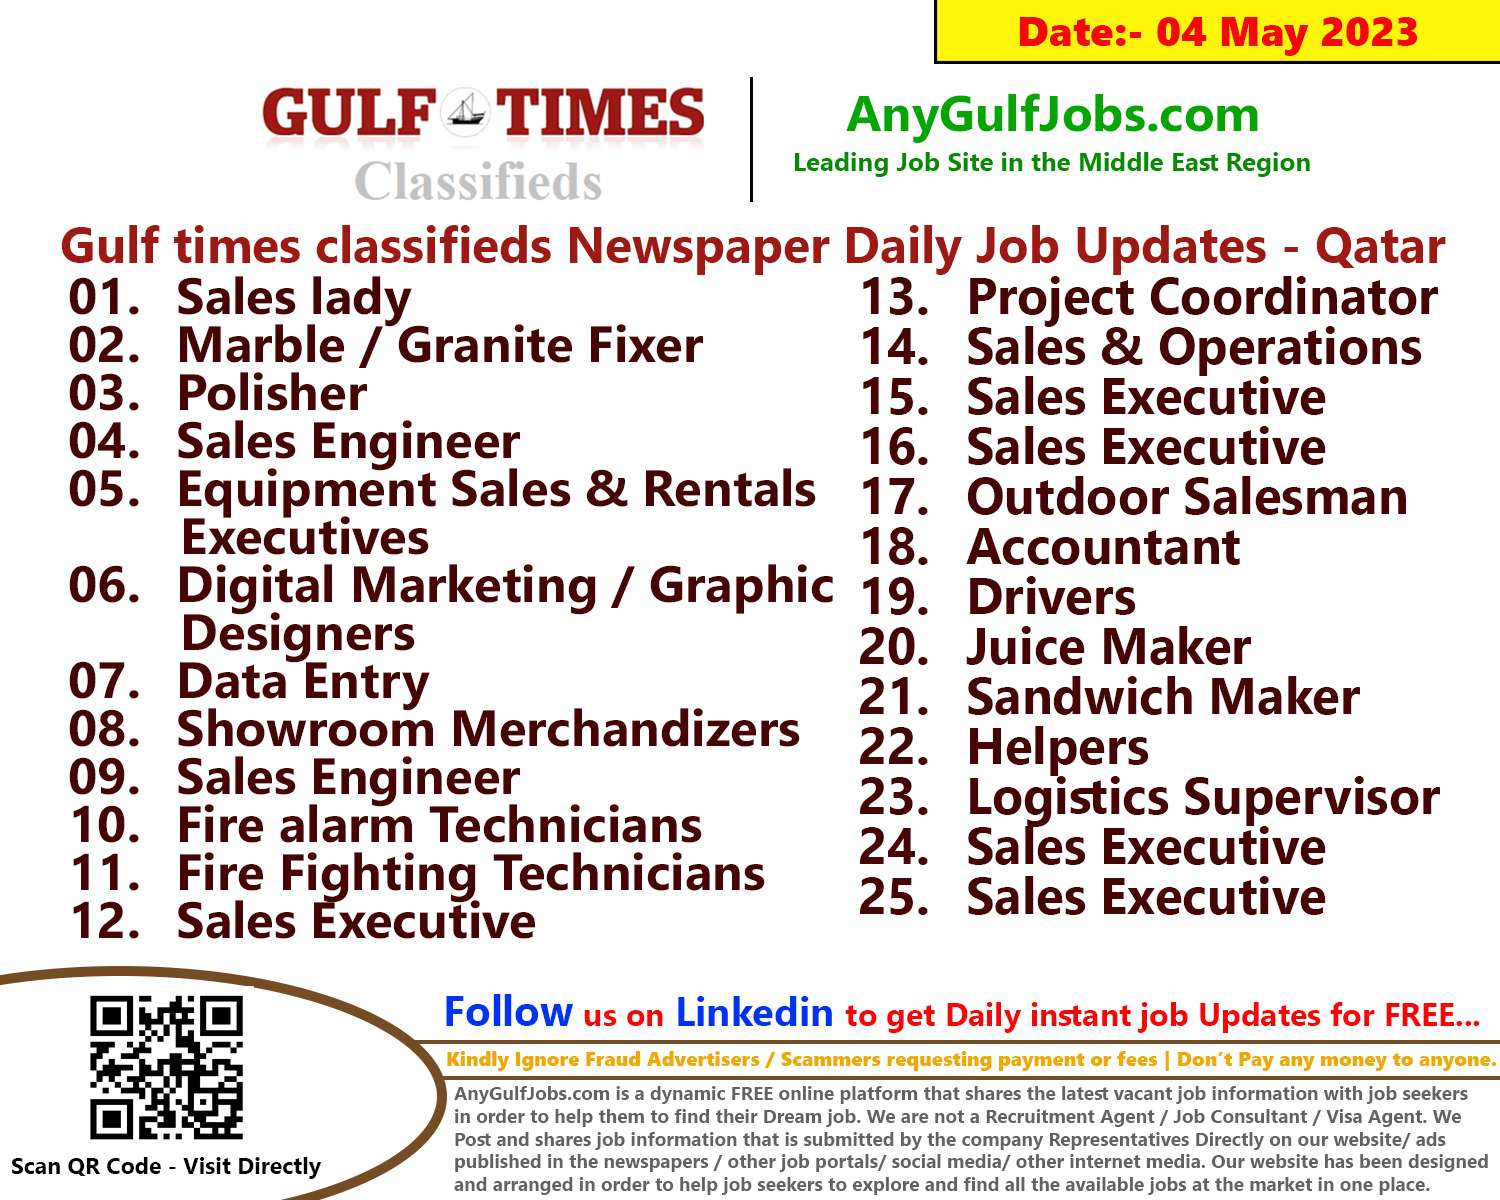 Gulf times classifieds Job Vacancies Qatar - 04 May 2023